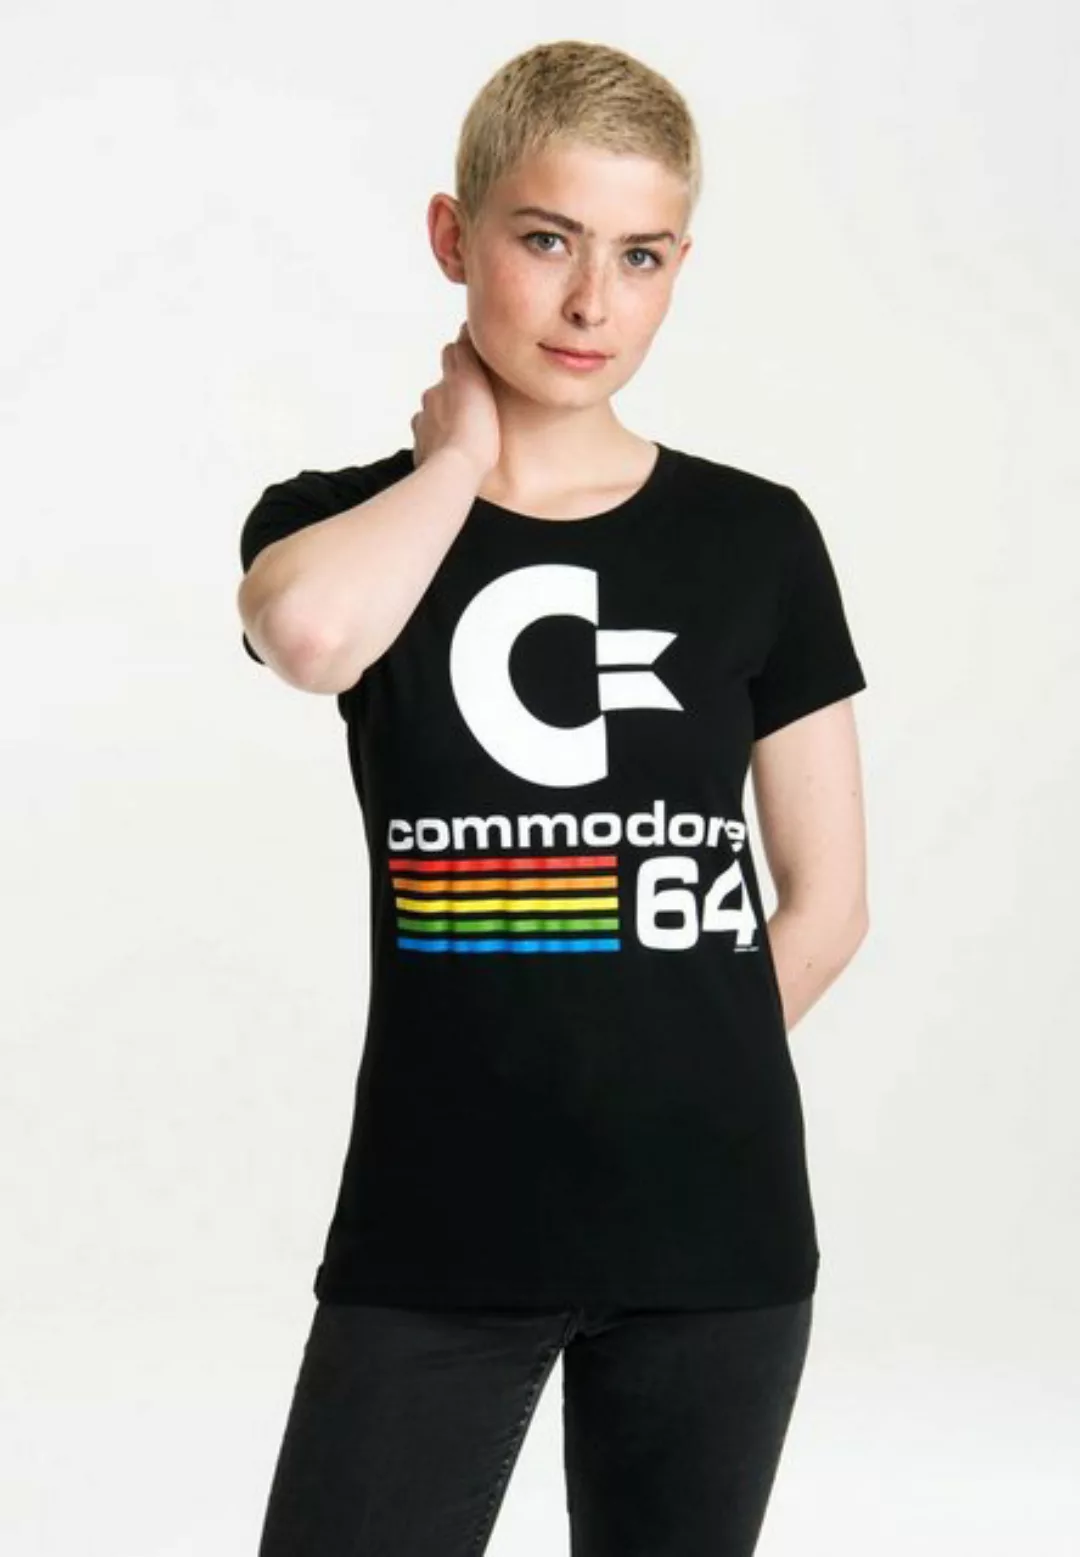 LOGOSHIRT T-Shirt "Commodore C64 Logo", mit Commodore 64-Logo günstig online kaufen